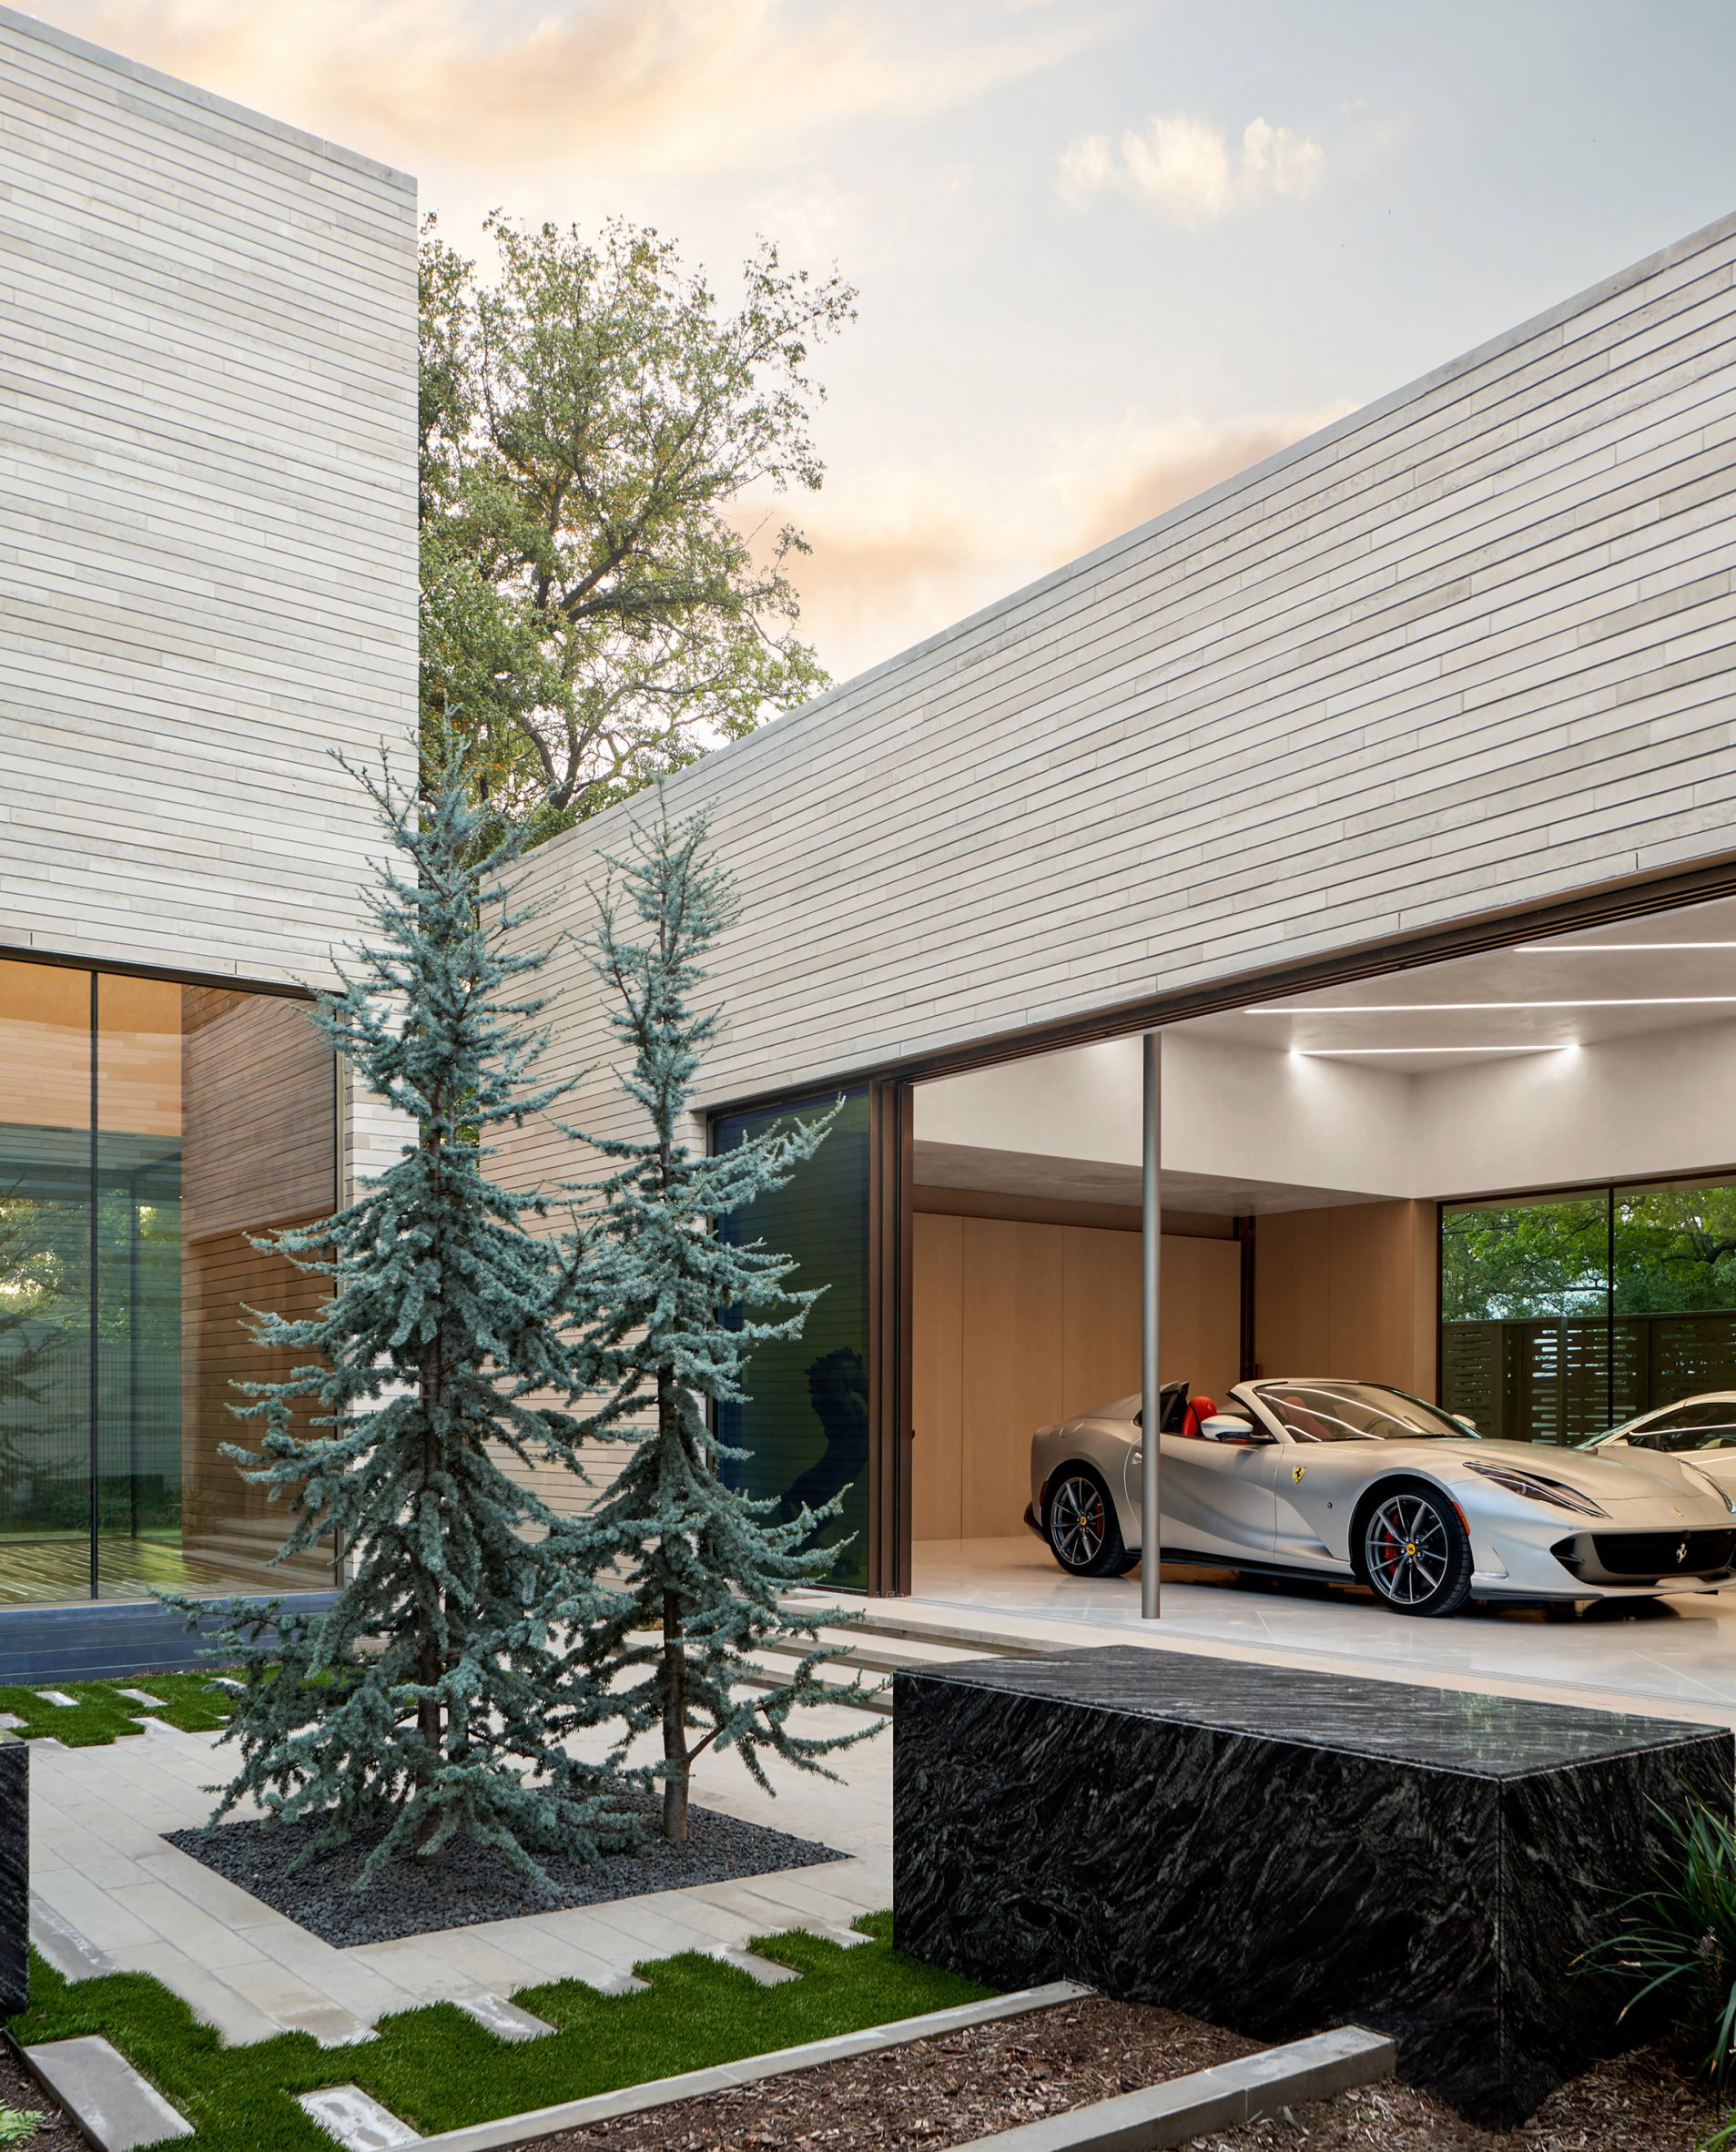 Limestone-clad dwelling with a Ferrari car in the background